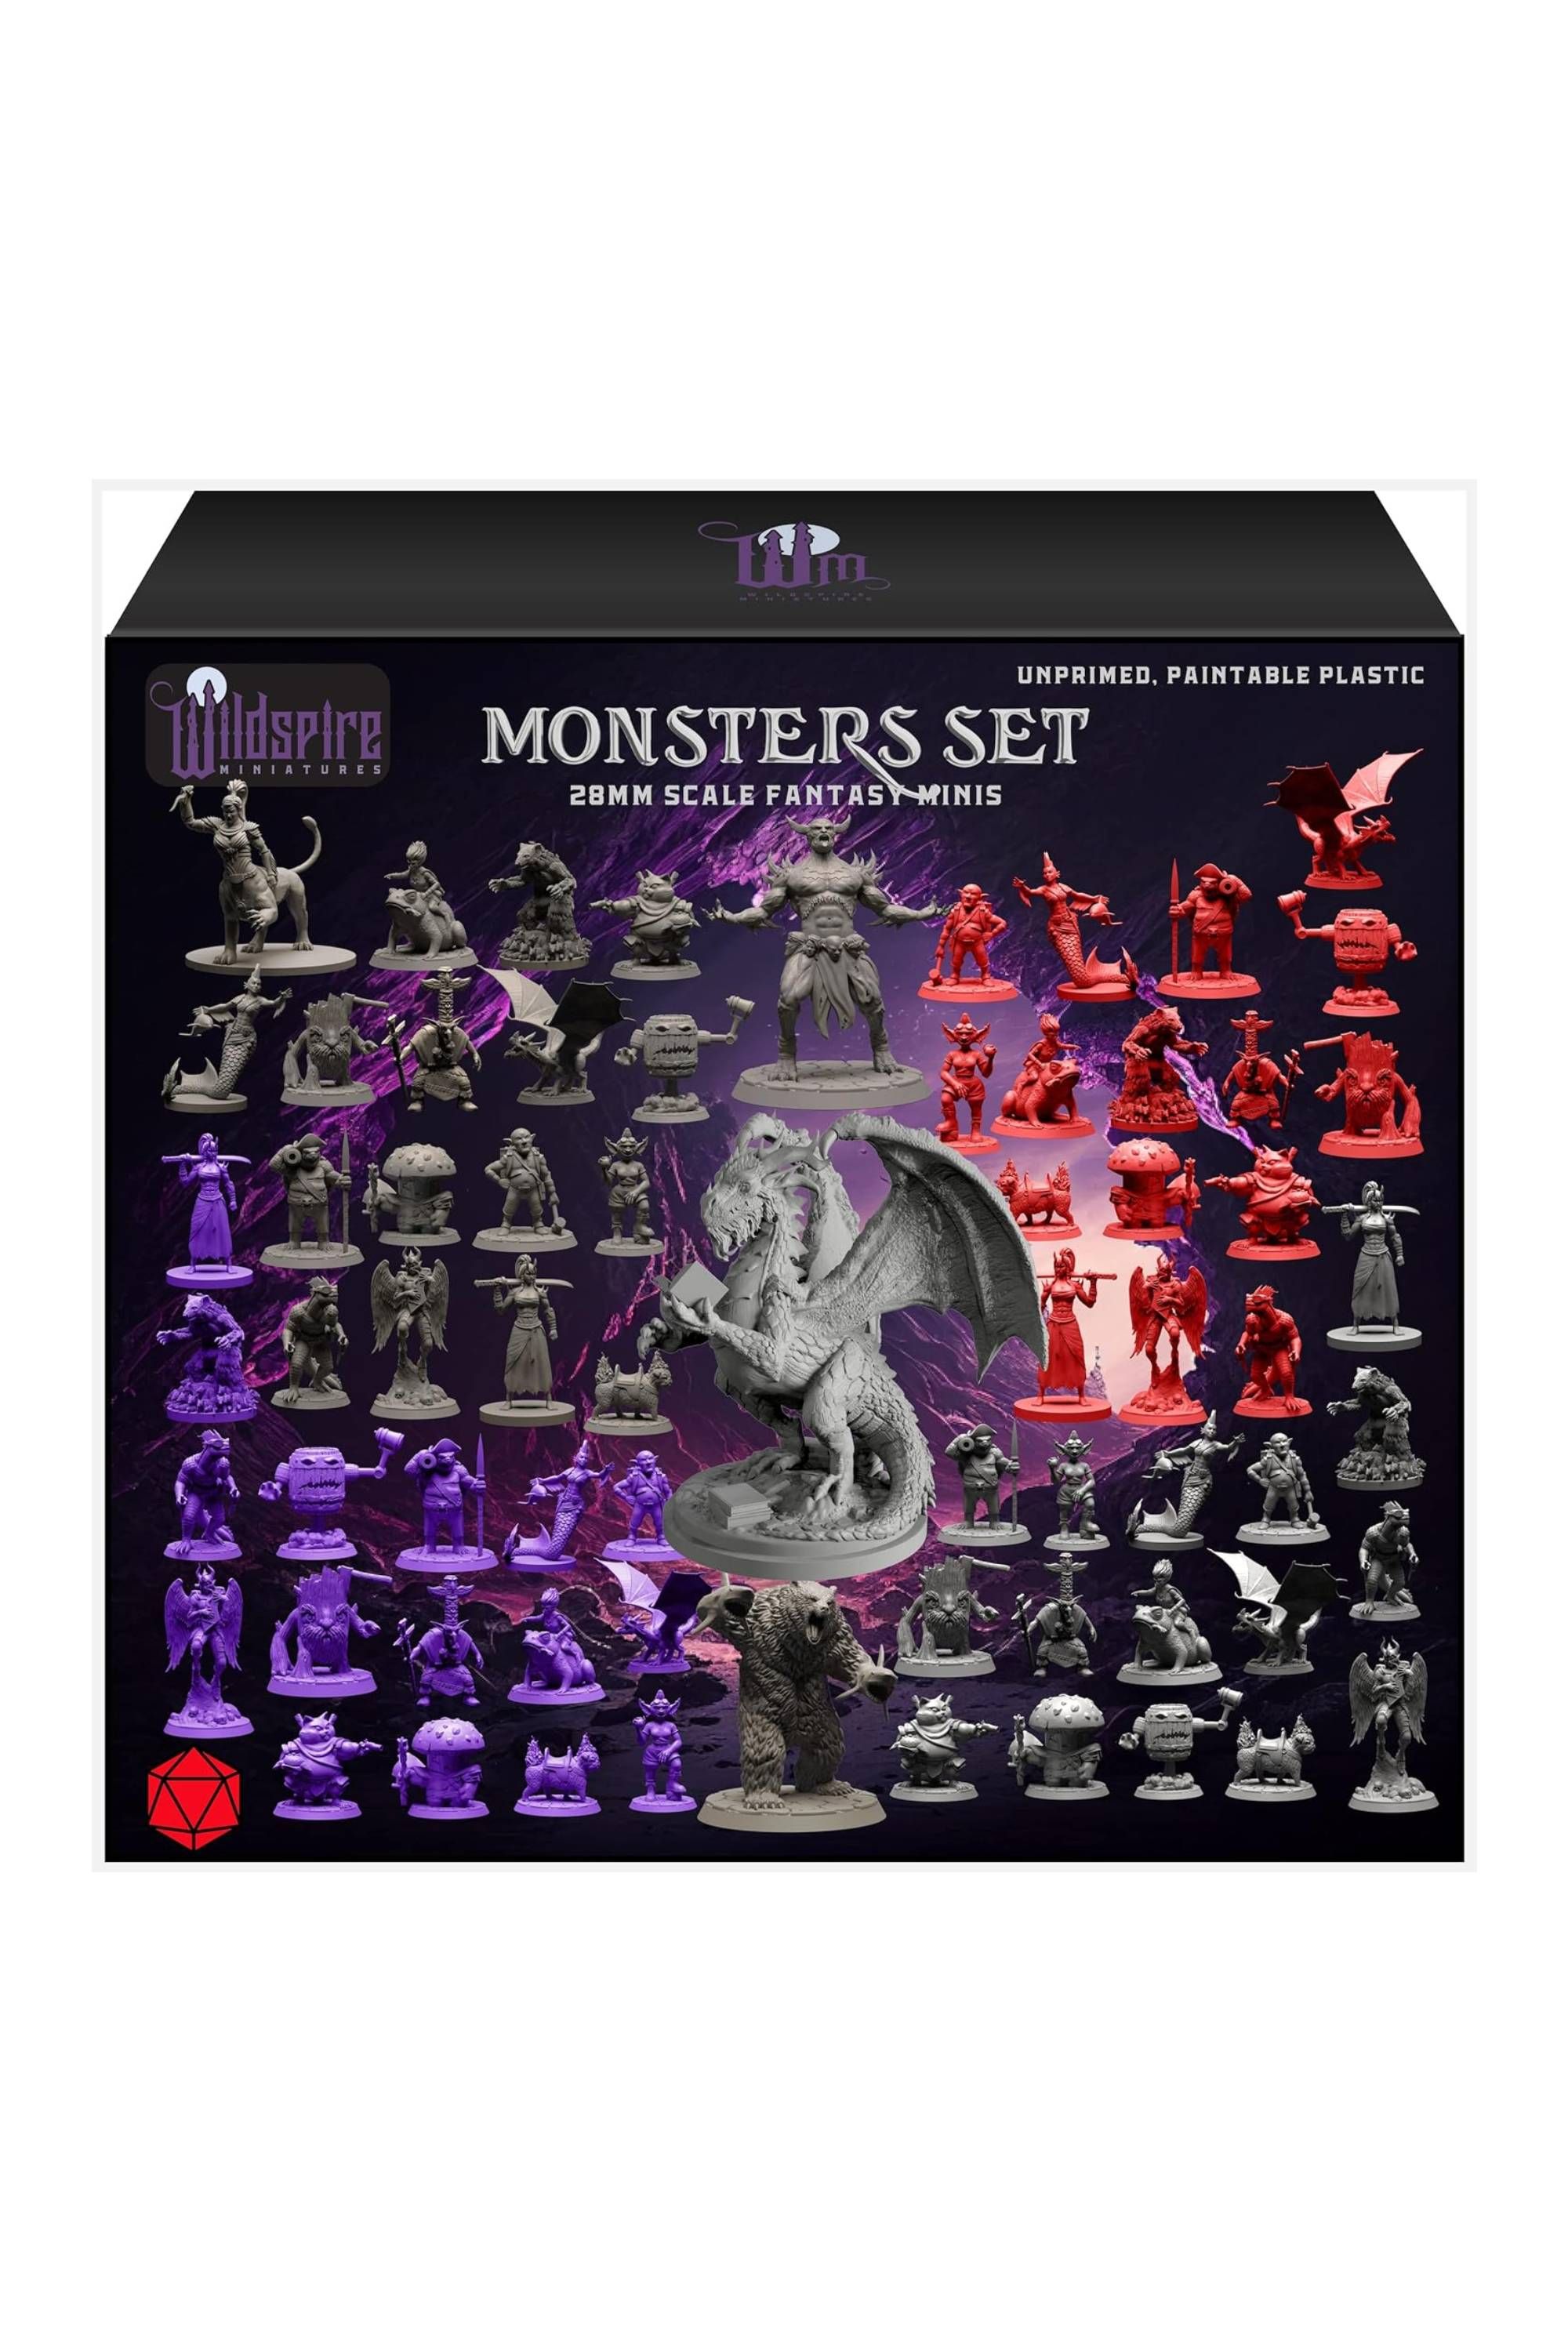 Wildspire Miniatures Fantasy-Minis-Monster-Set im Maßstab 28 mm